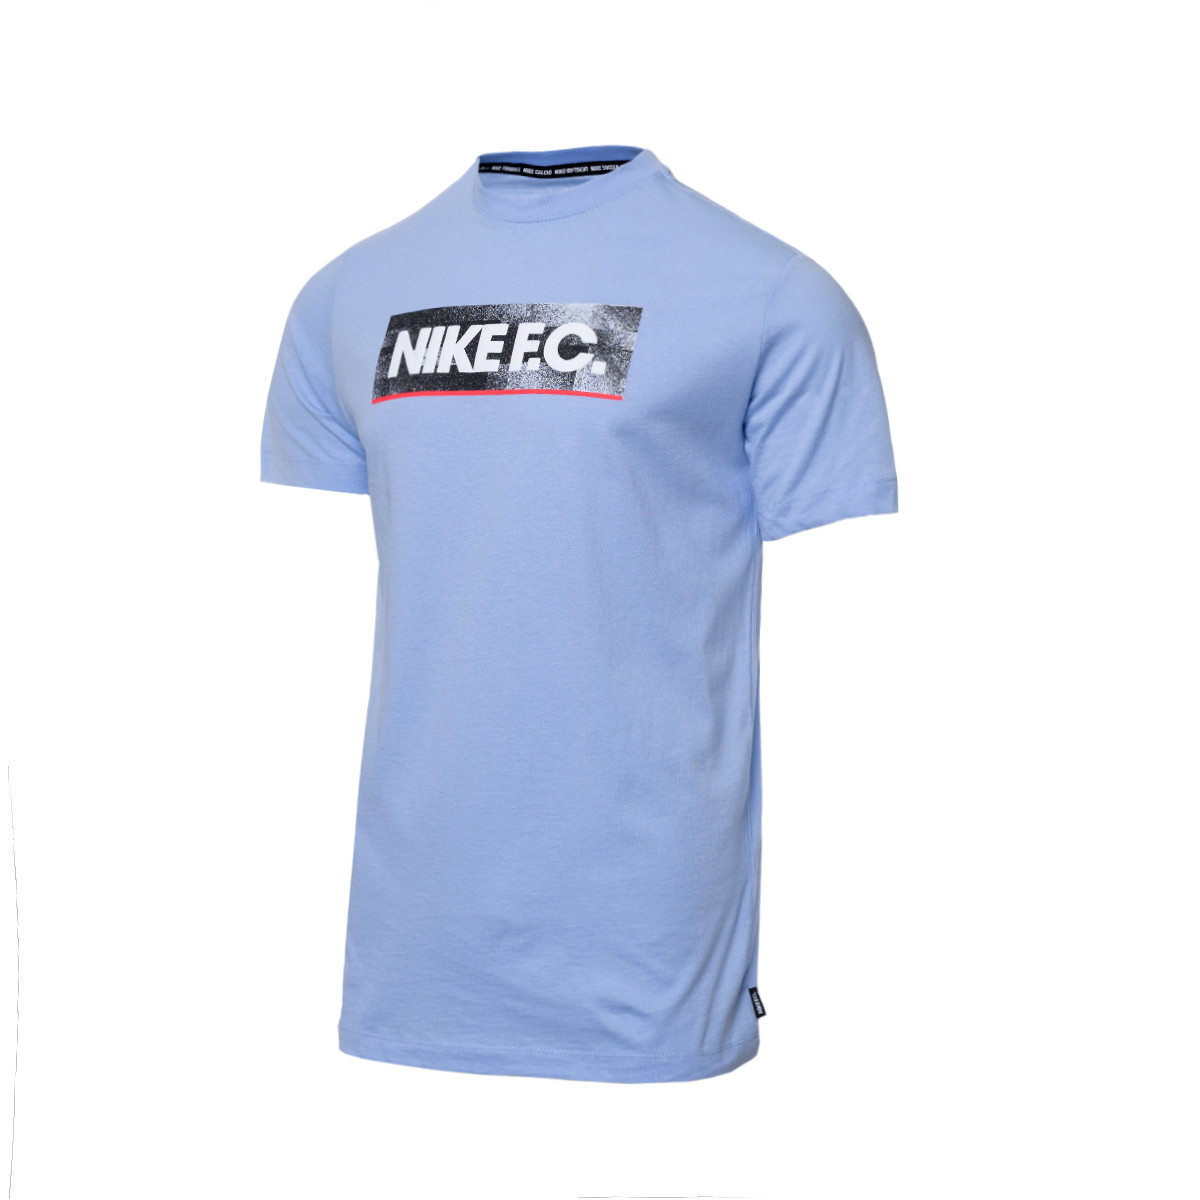 Camiseta Nike NSW NIKE FC Seasonal Light Marine - Fútbol Emotion